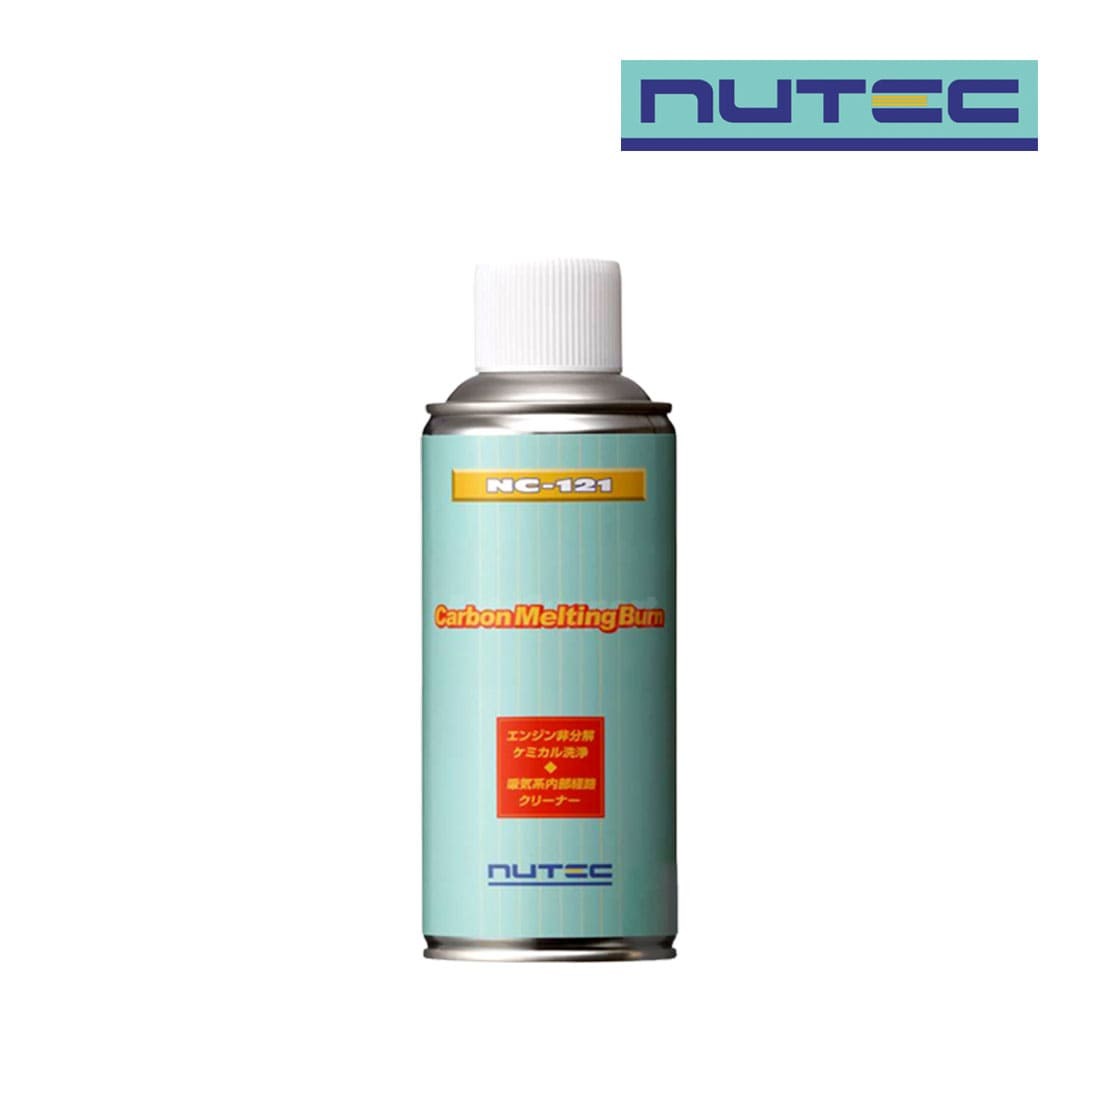 NUTEC ニューテック 吸気系内部経路クリーナー 添加剤 NC121 250ml カーボンメルティングバーン_画像1